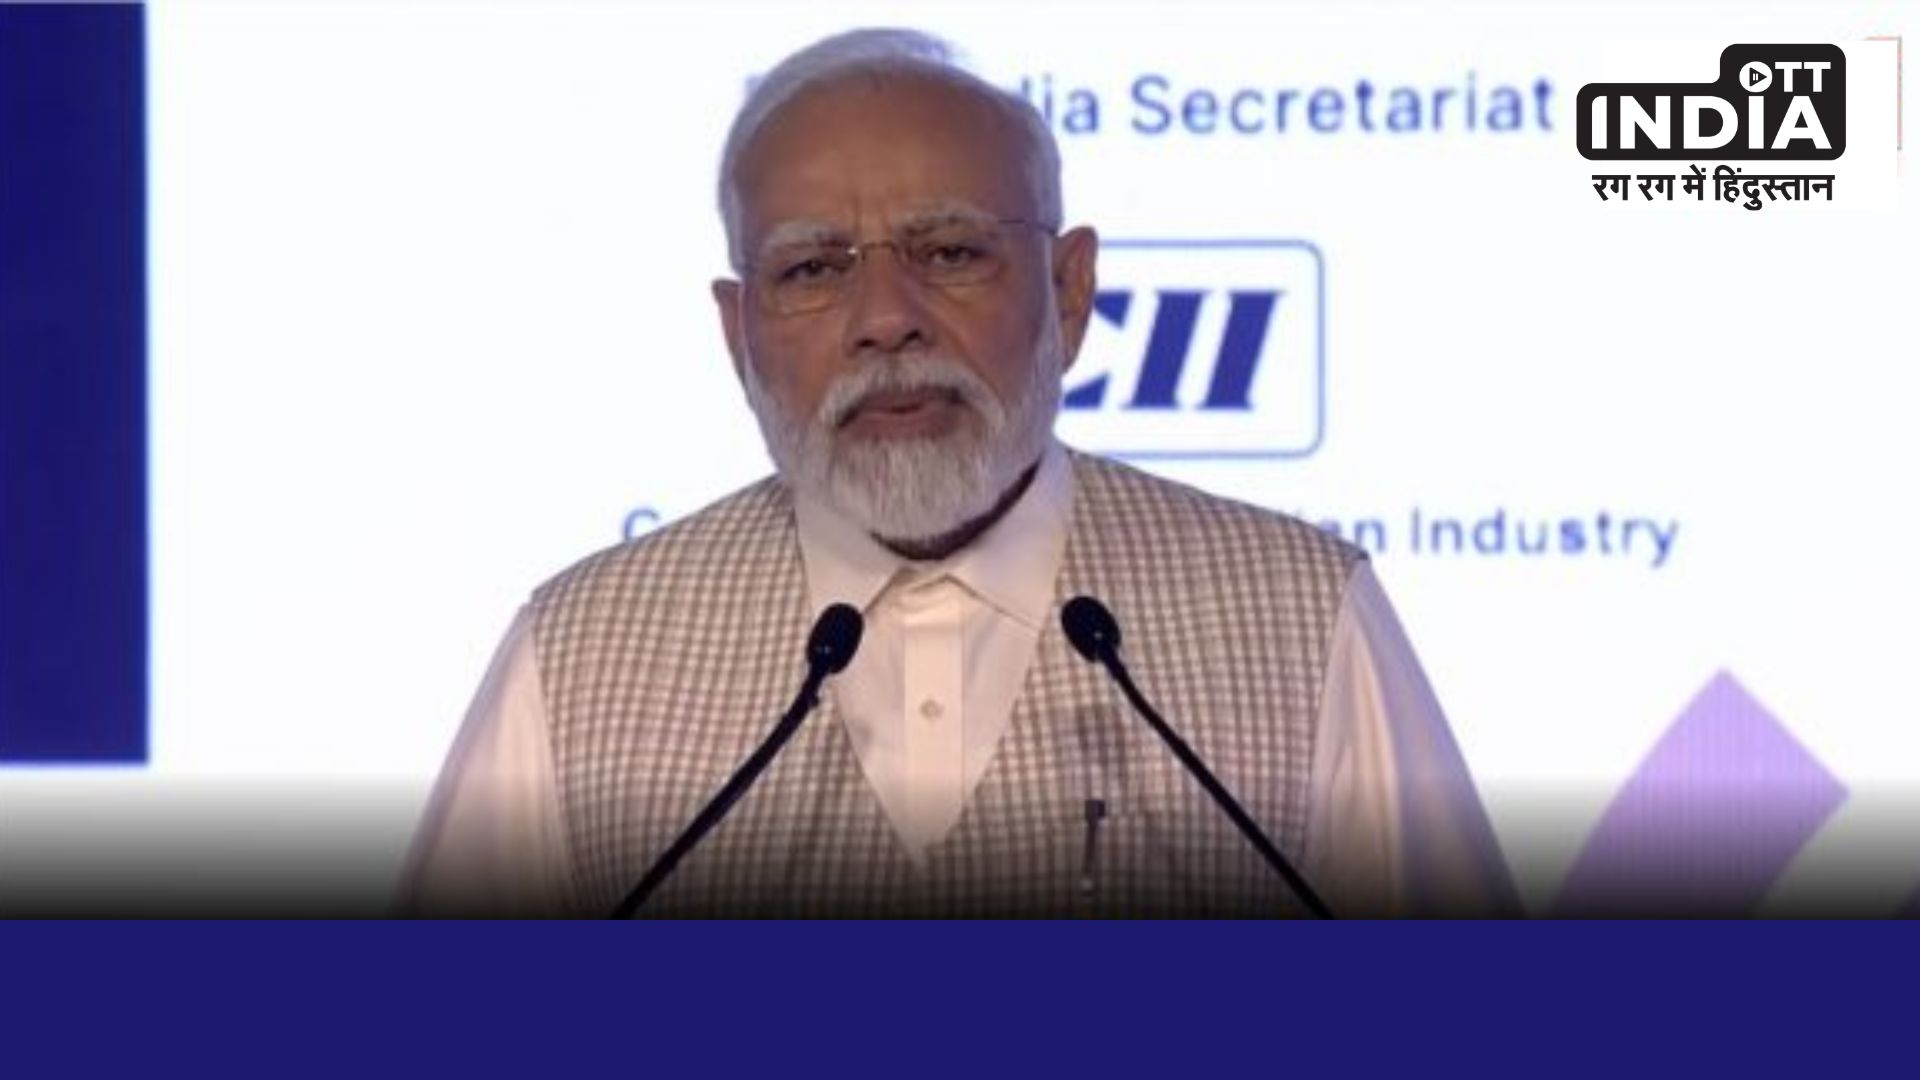 B20 Summit India PM Modi Said patnership with India is important in B20 Summit